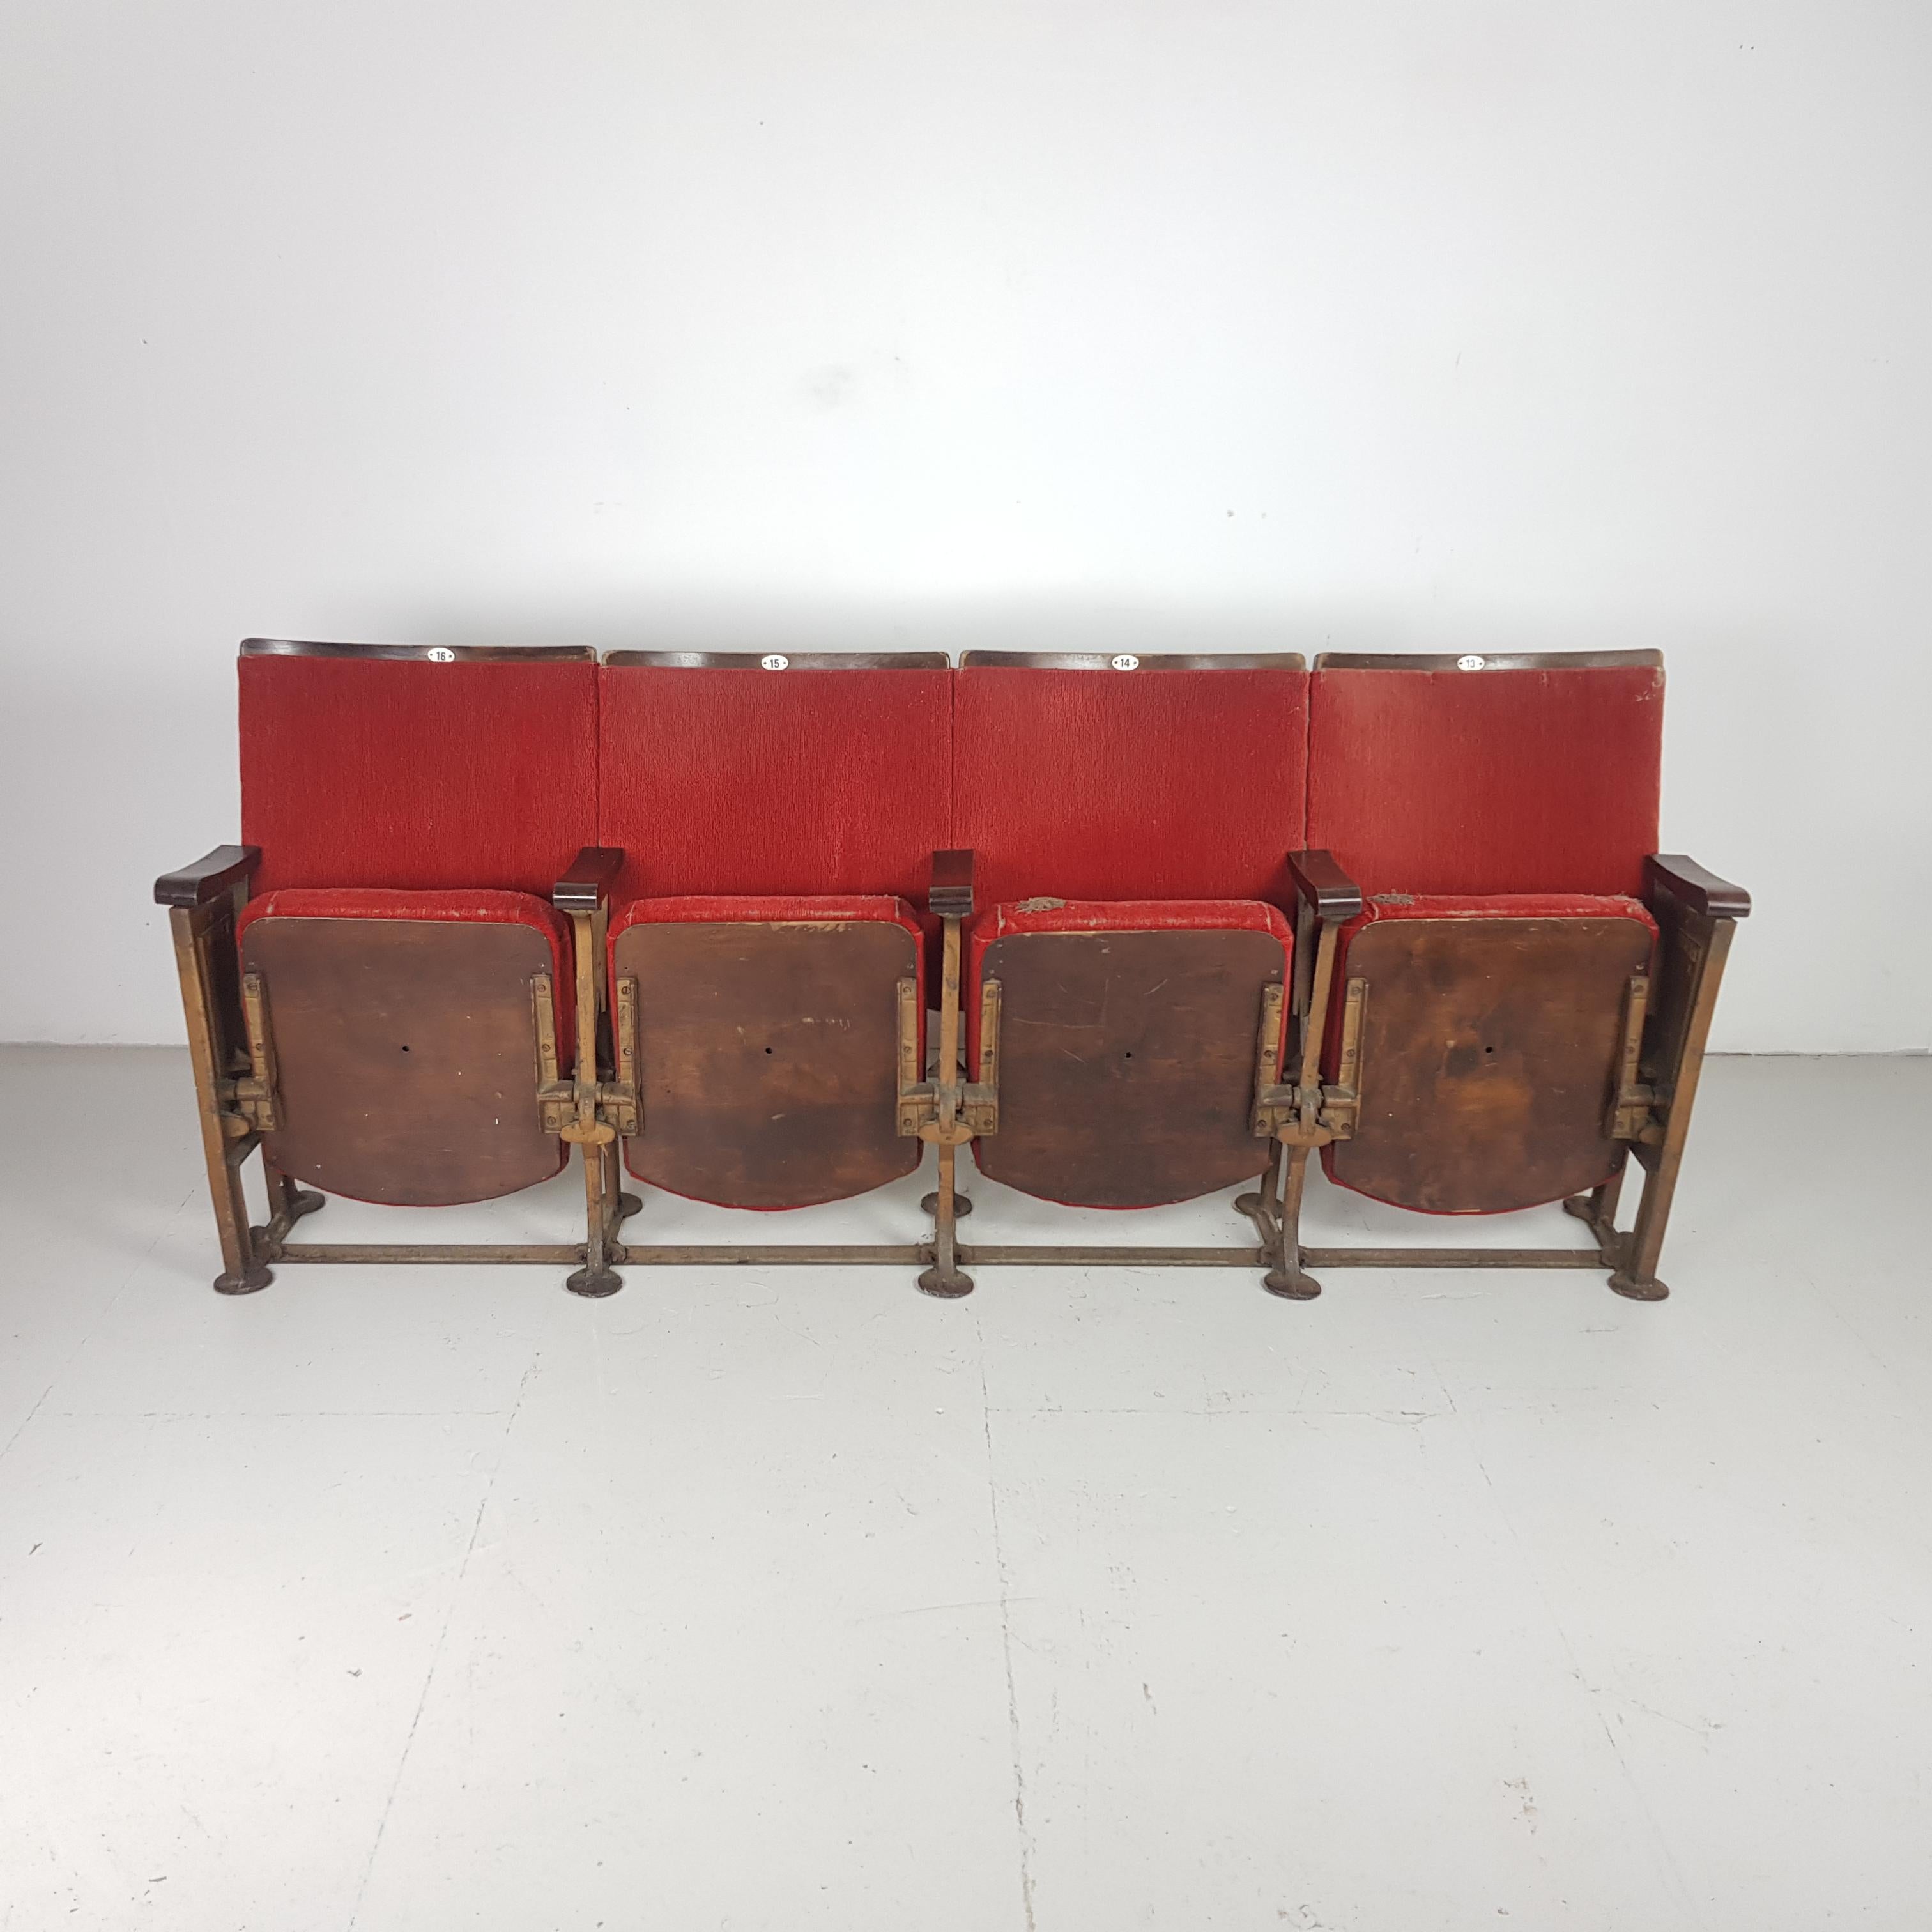 20th Century Art Deco British Red Velvet Cinema Seats For Sale